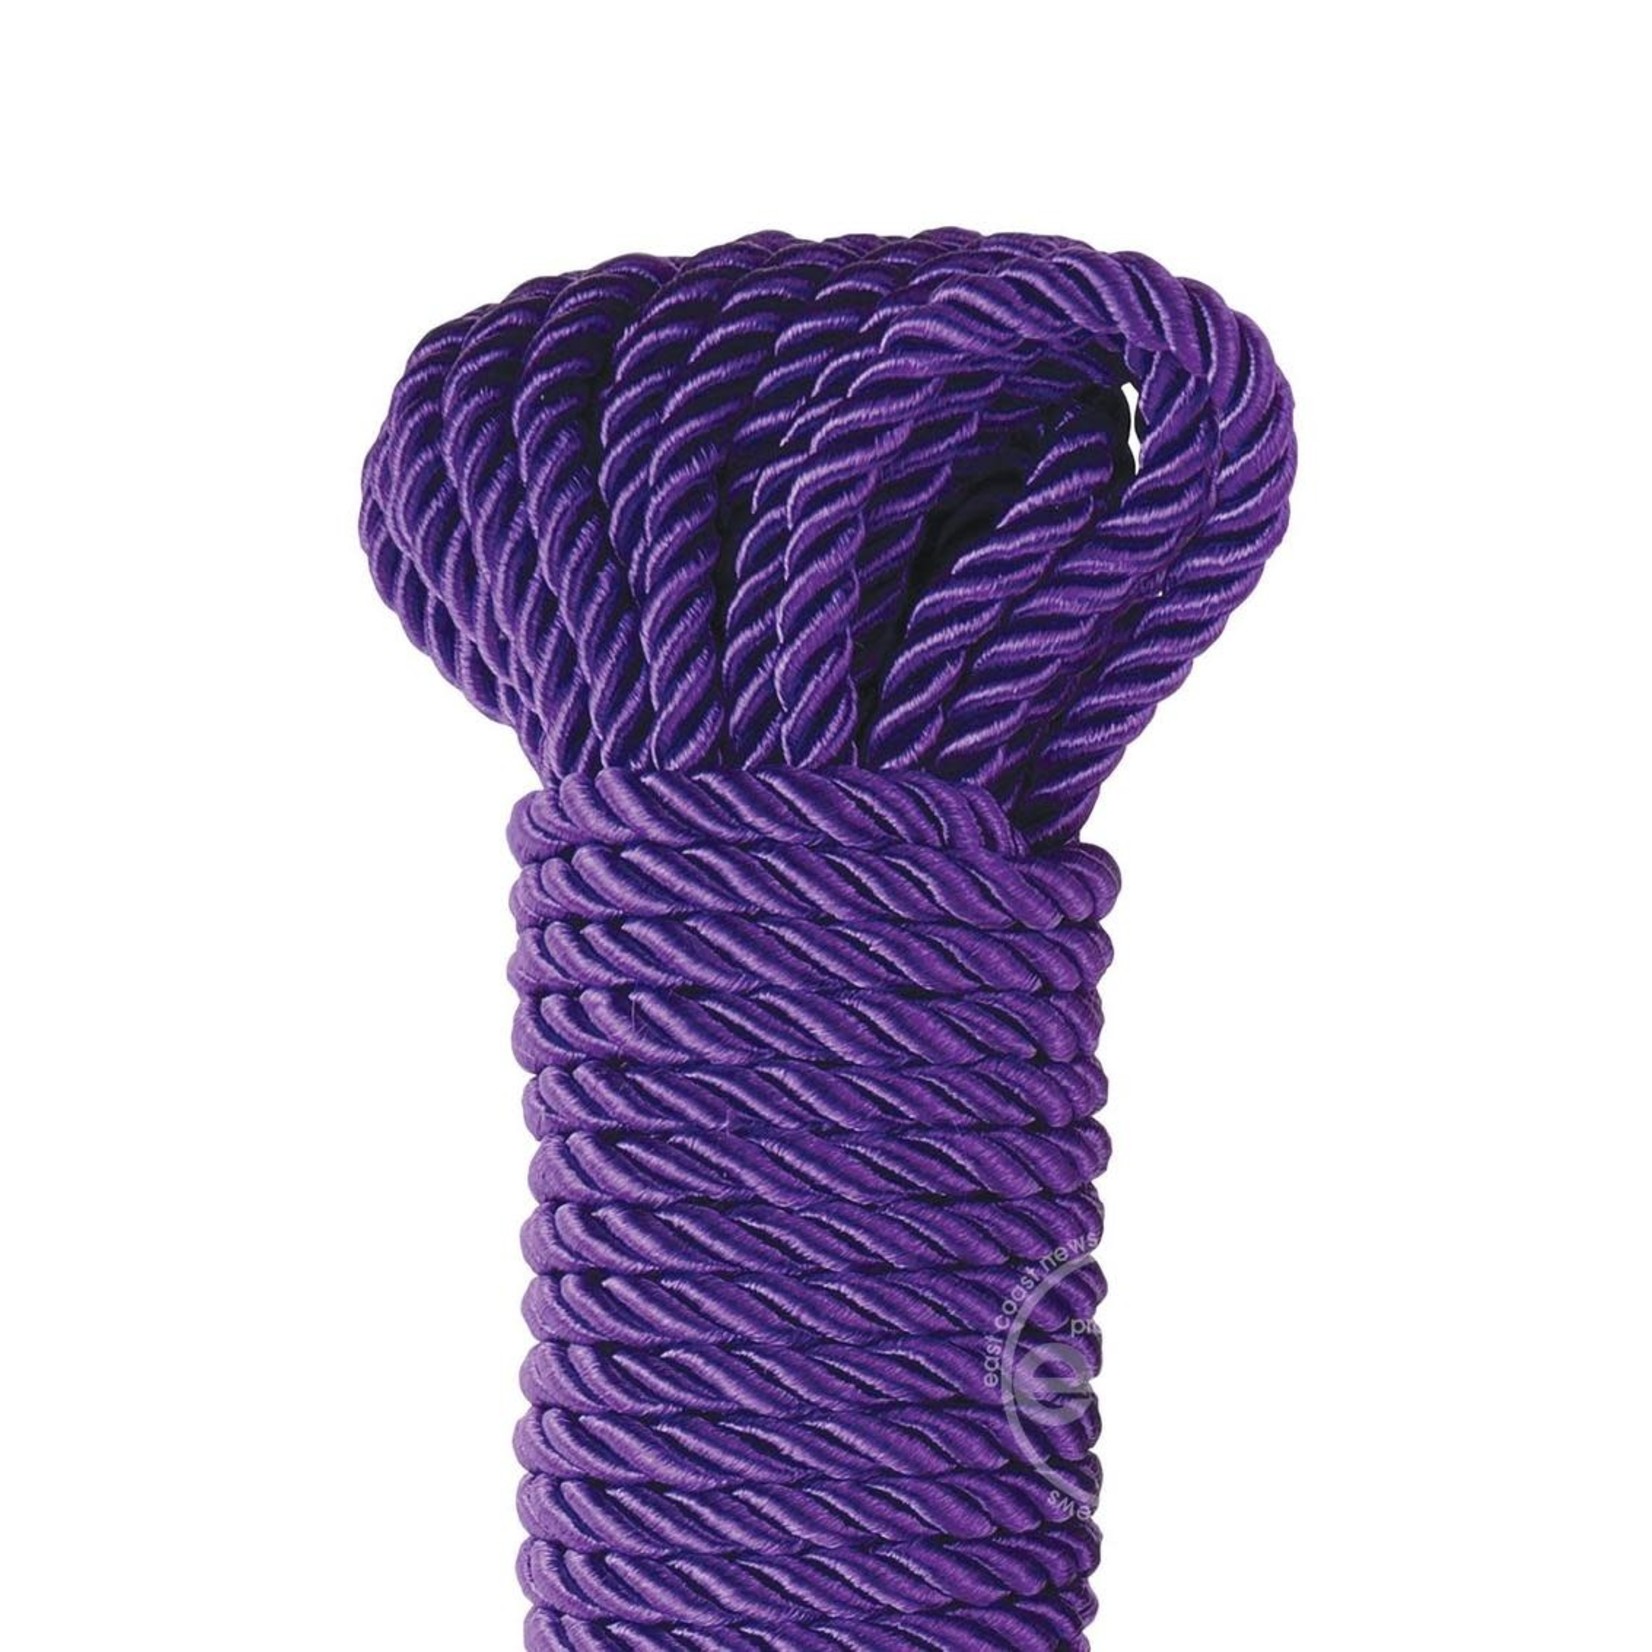 Festish Fantasy Series Deluxe Silk Rope Purple 32 Feet